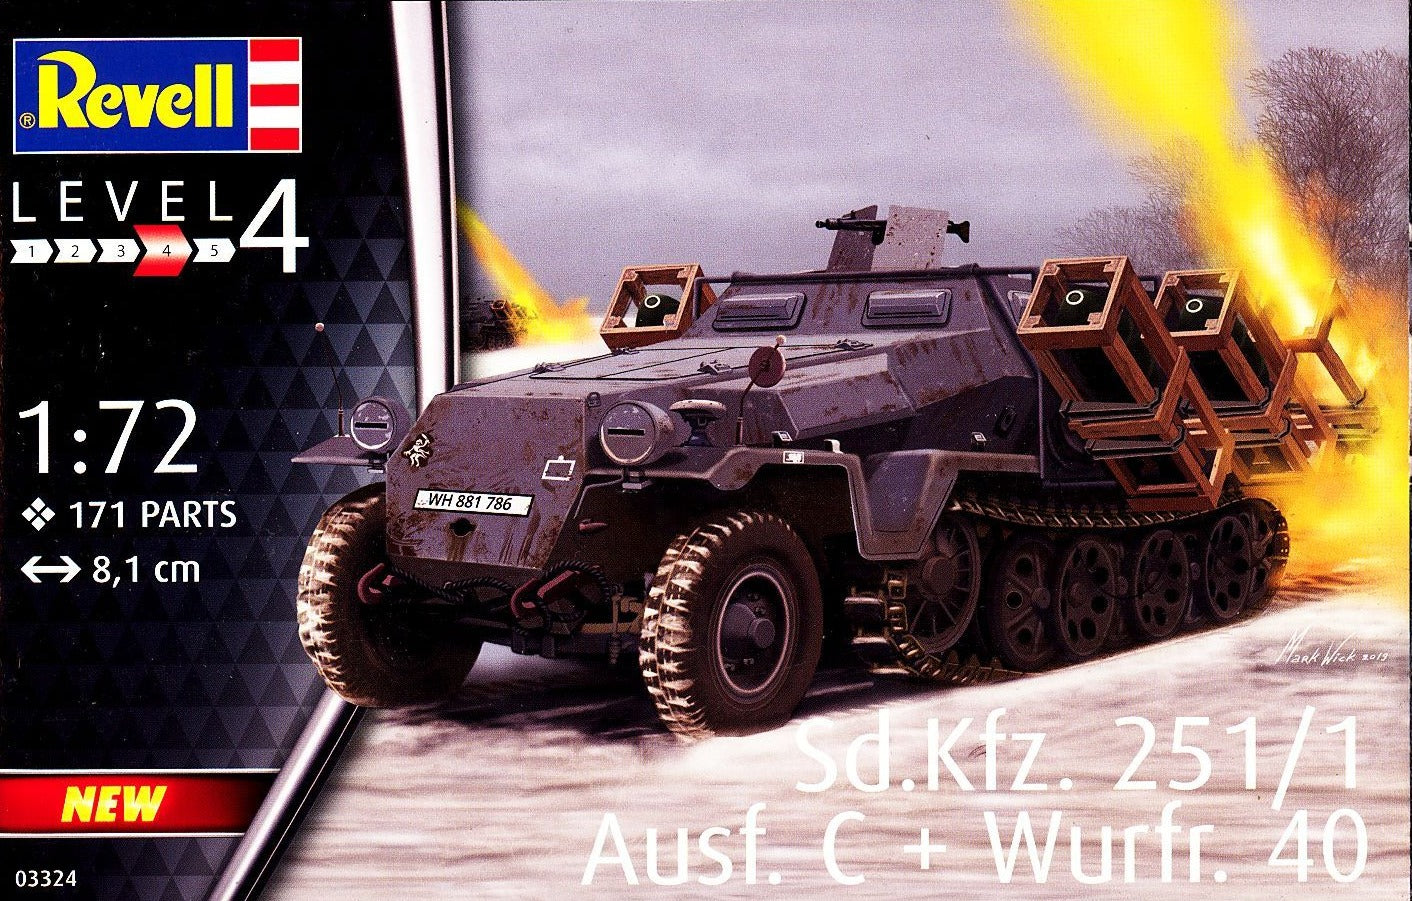 SD.KFZ.251/1 AUSF.C+WURFR.40 1/72 LUNGH 8.1 cm